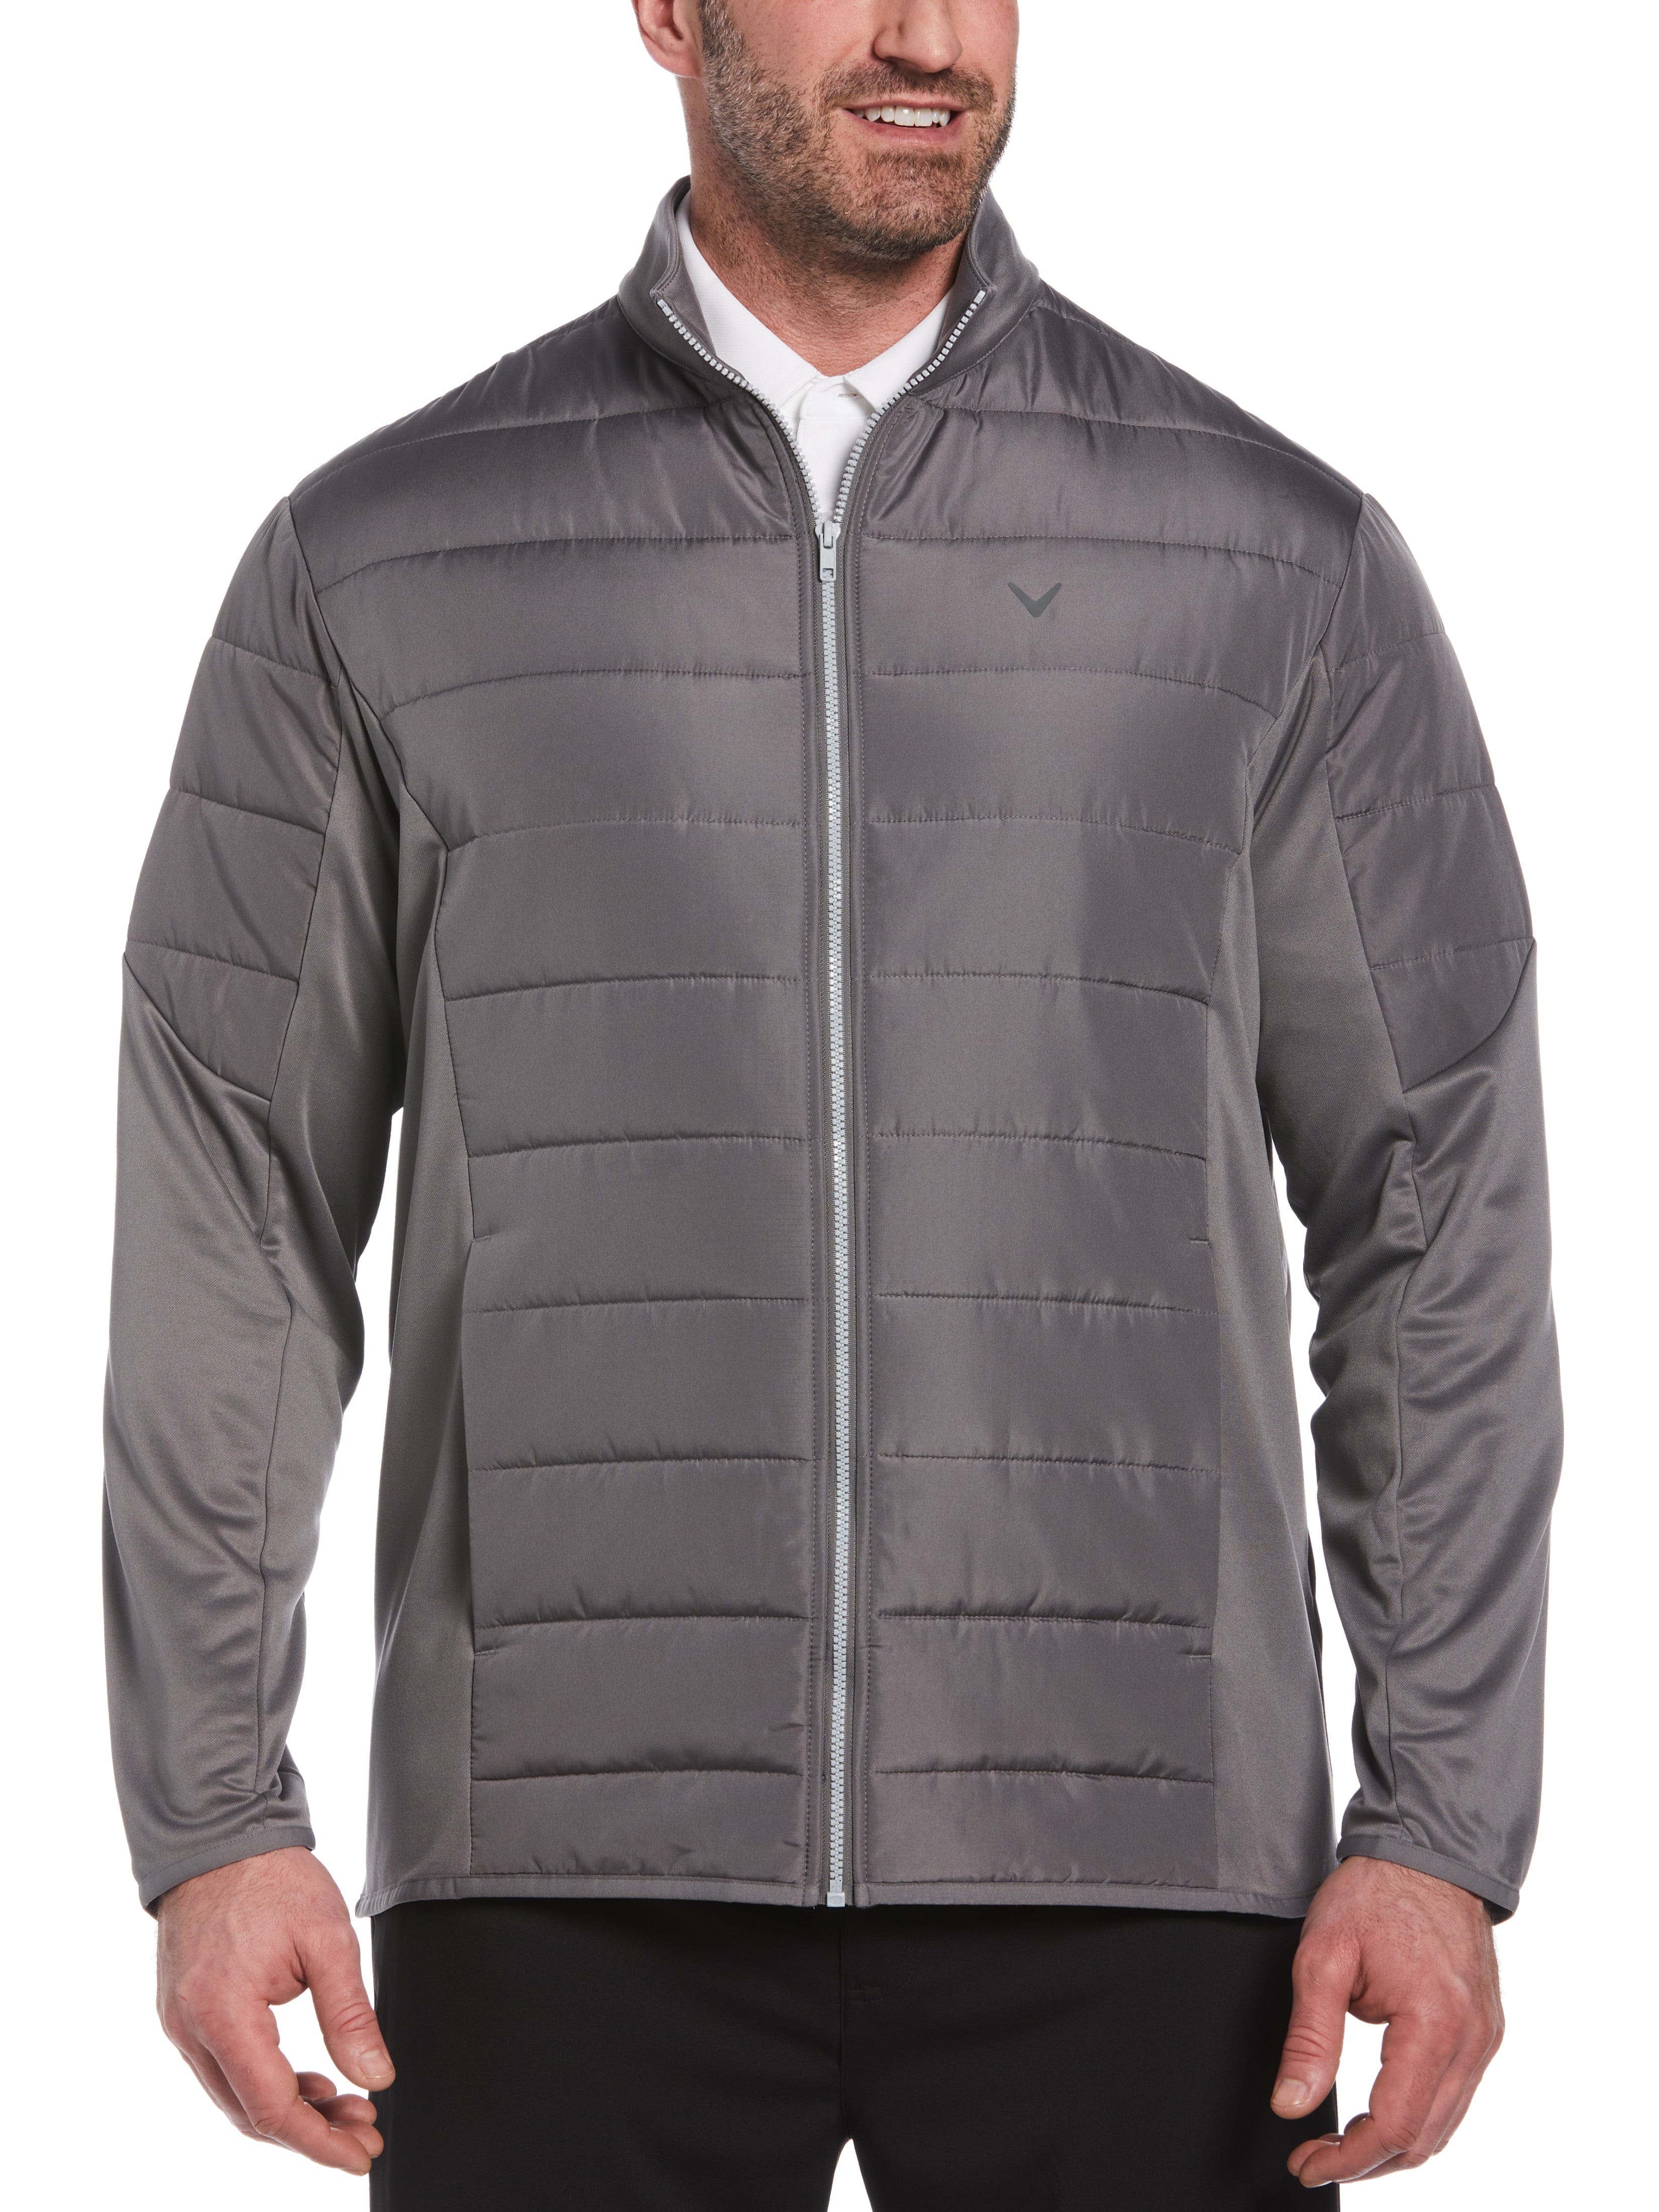 Callaway Apparel Mens Big & Tall Hybrid Performance Puffer Jacket Top, Size 2X, Quiet Shade Gray, 100% Polyester | Golf Apparel Shop